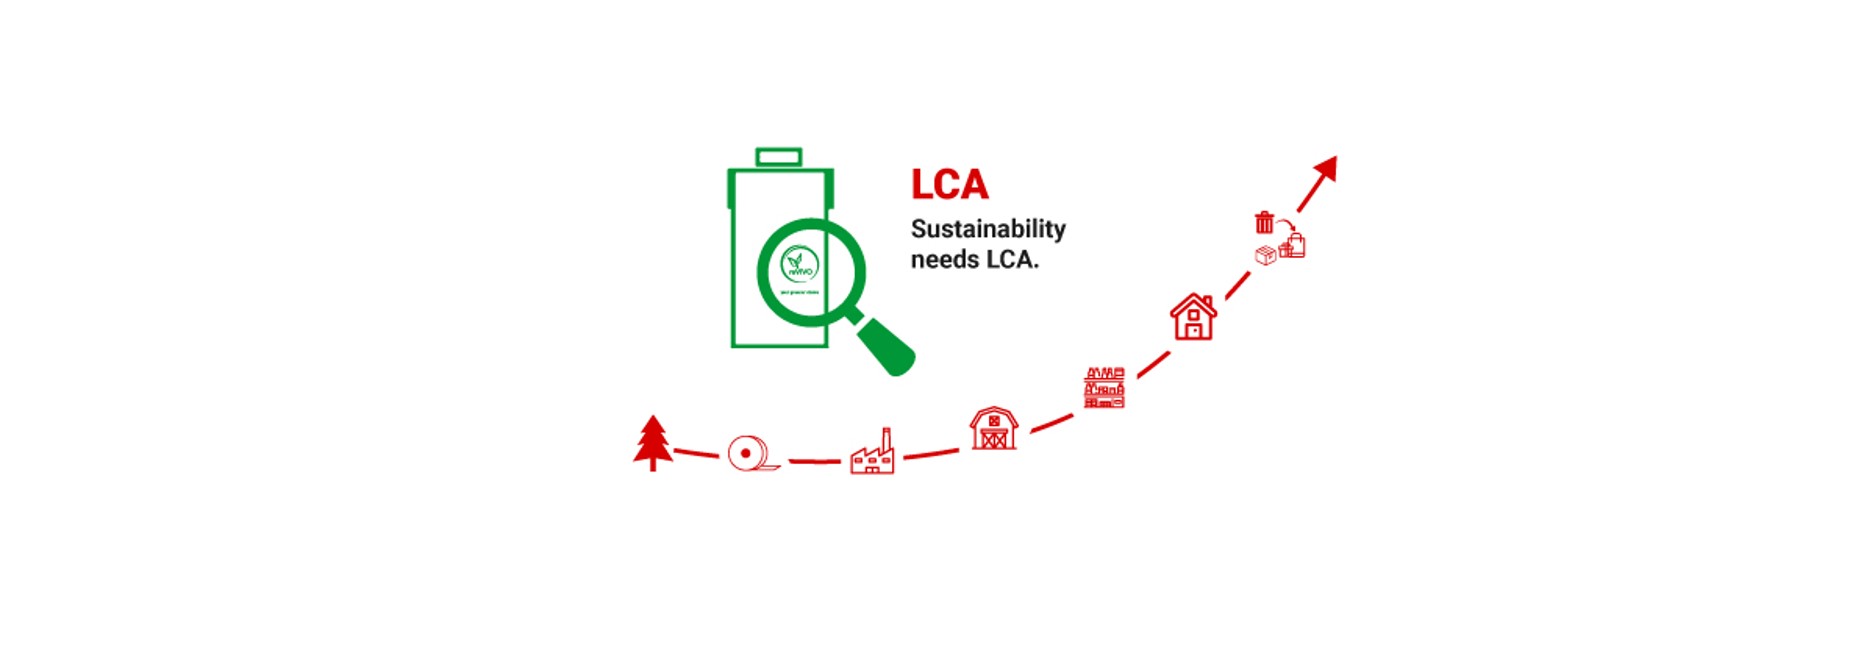 Perché qualsiasi strategia di packaging sostenibile deve includere un’analisi di Life Cycle Assessment (LCA)